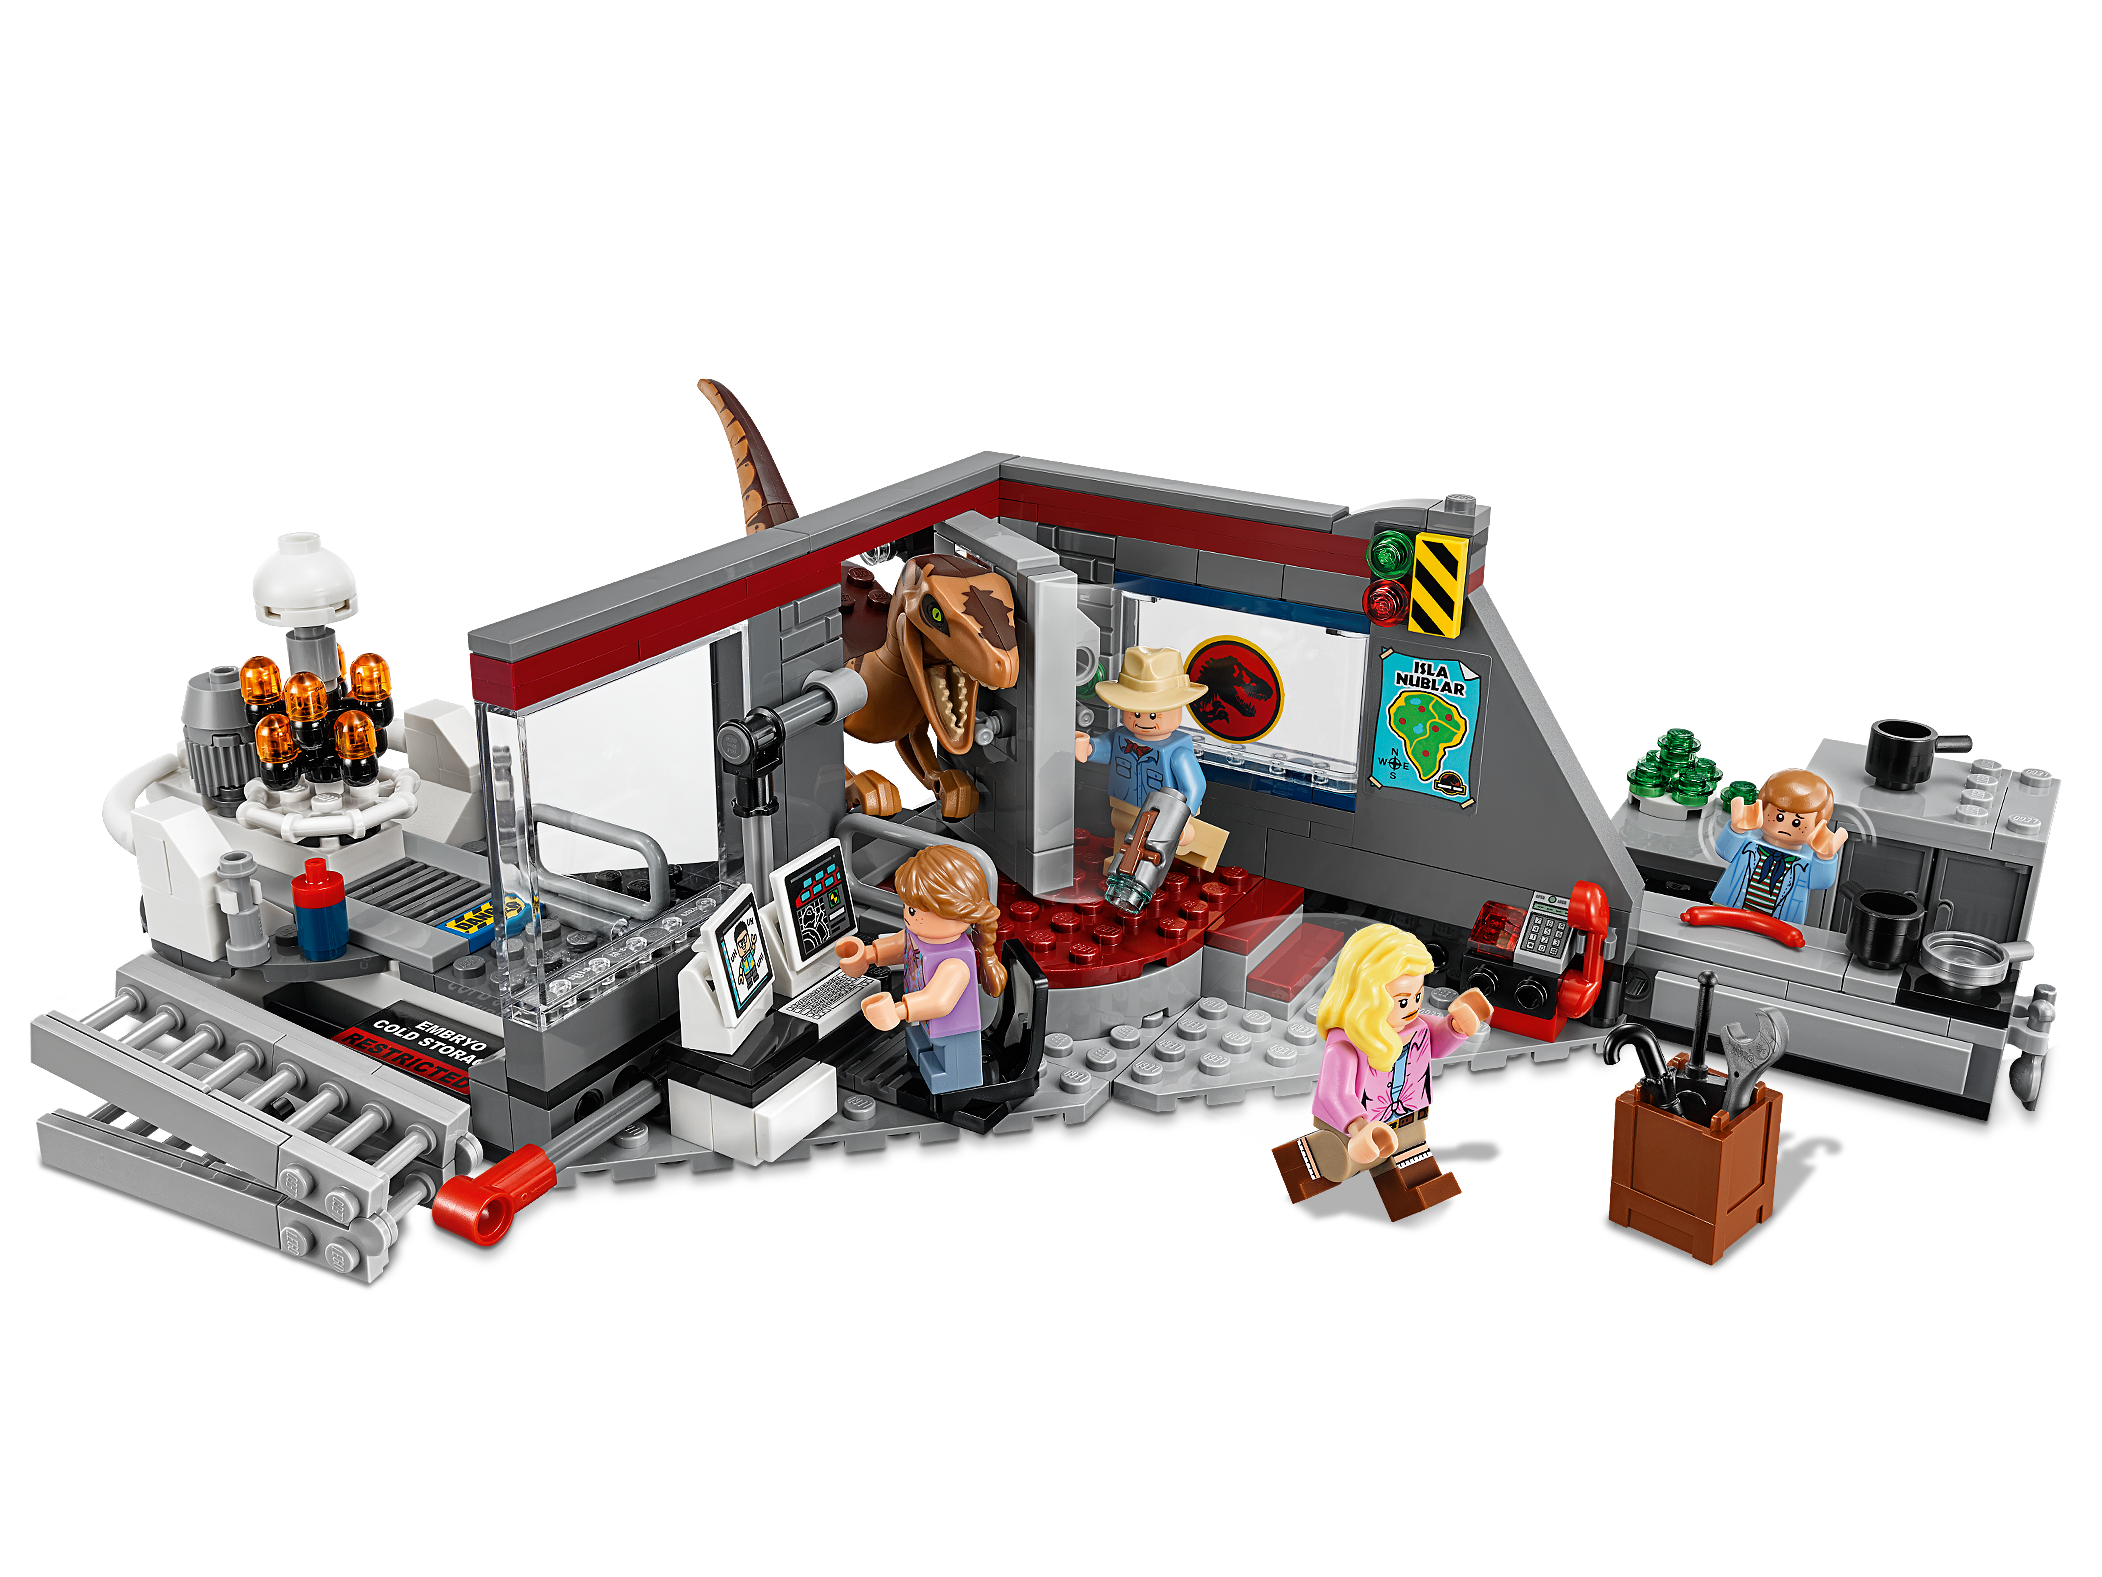 New Lego Jurassic World Minifigure TIM MURPHY from set 75932 